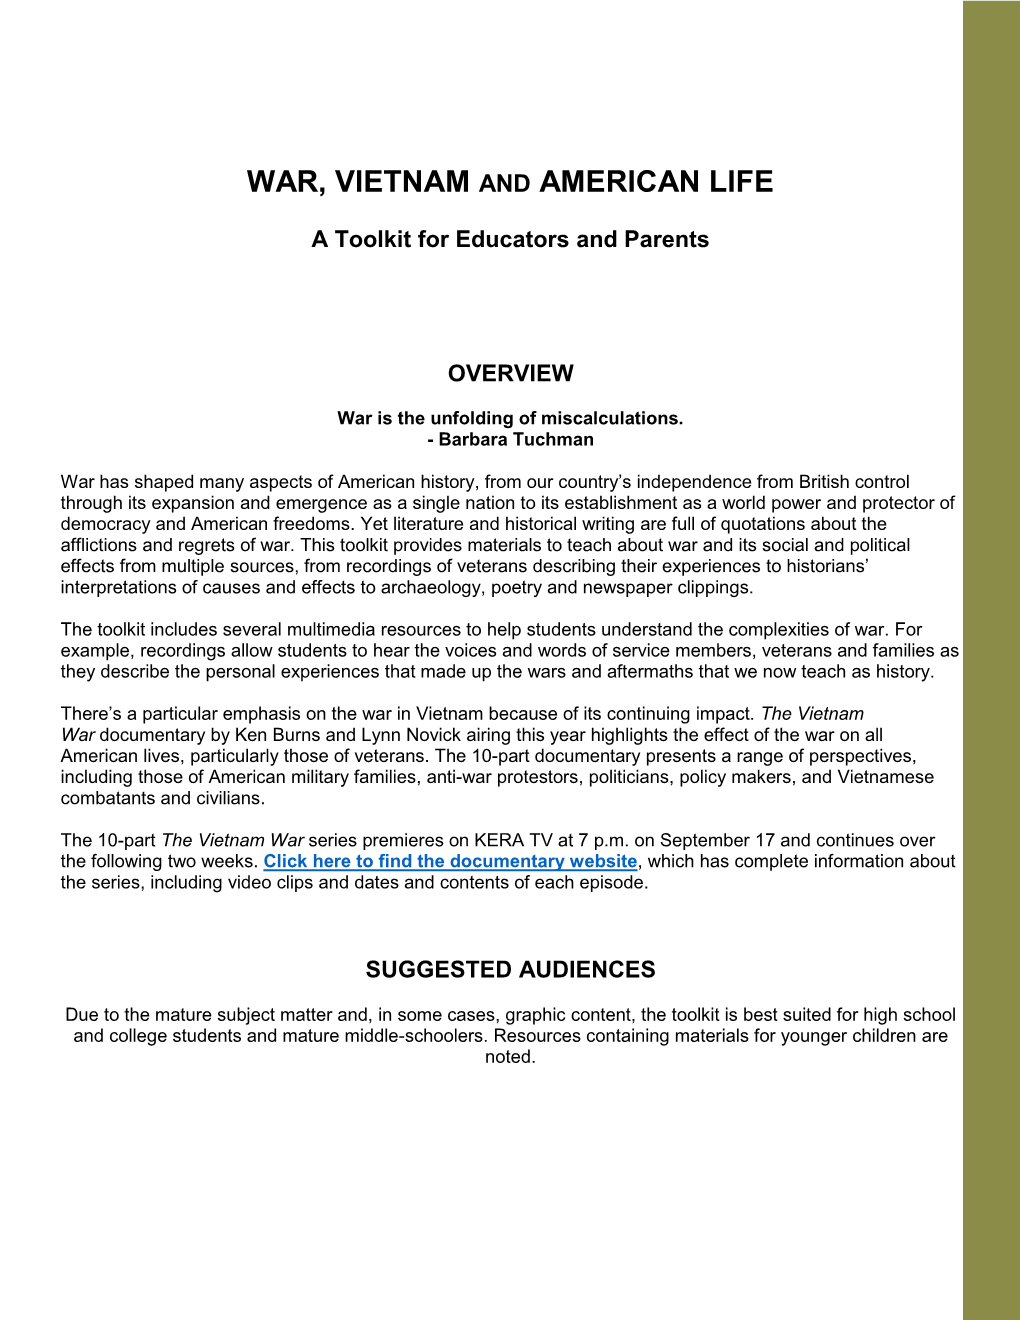 War, Vietnam and American Life